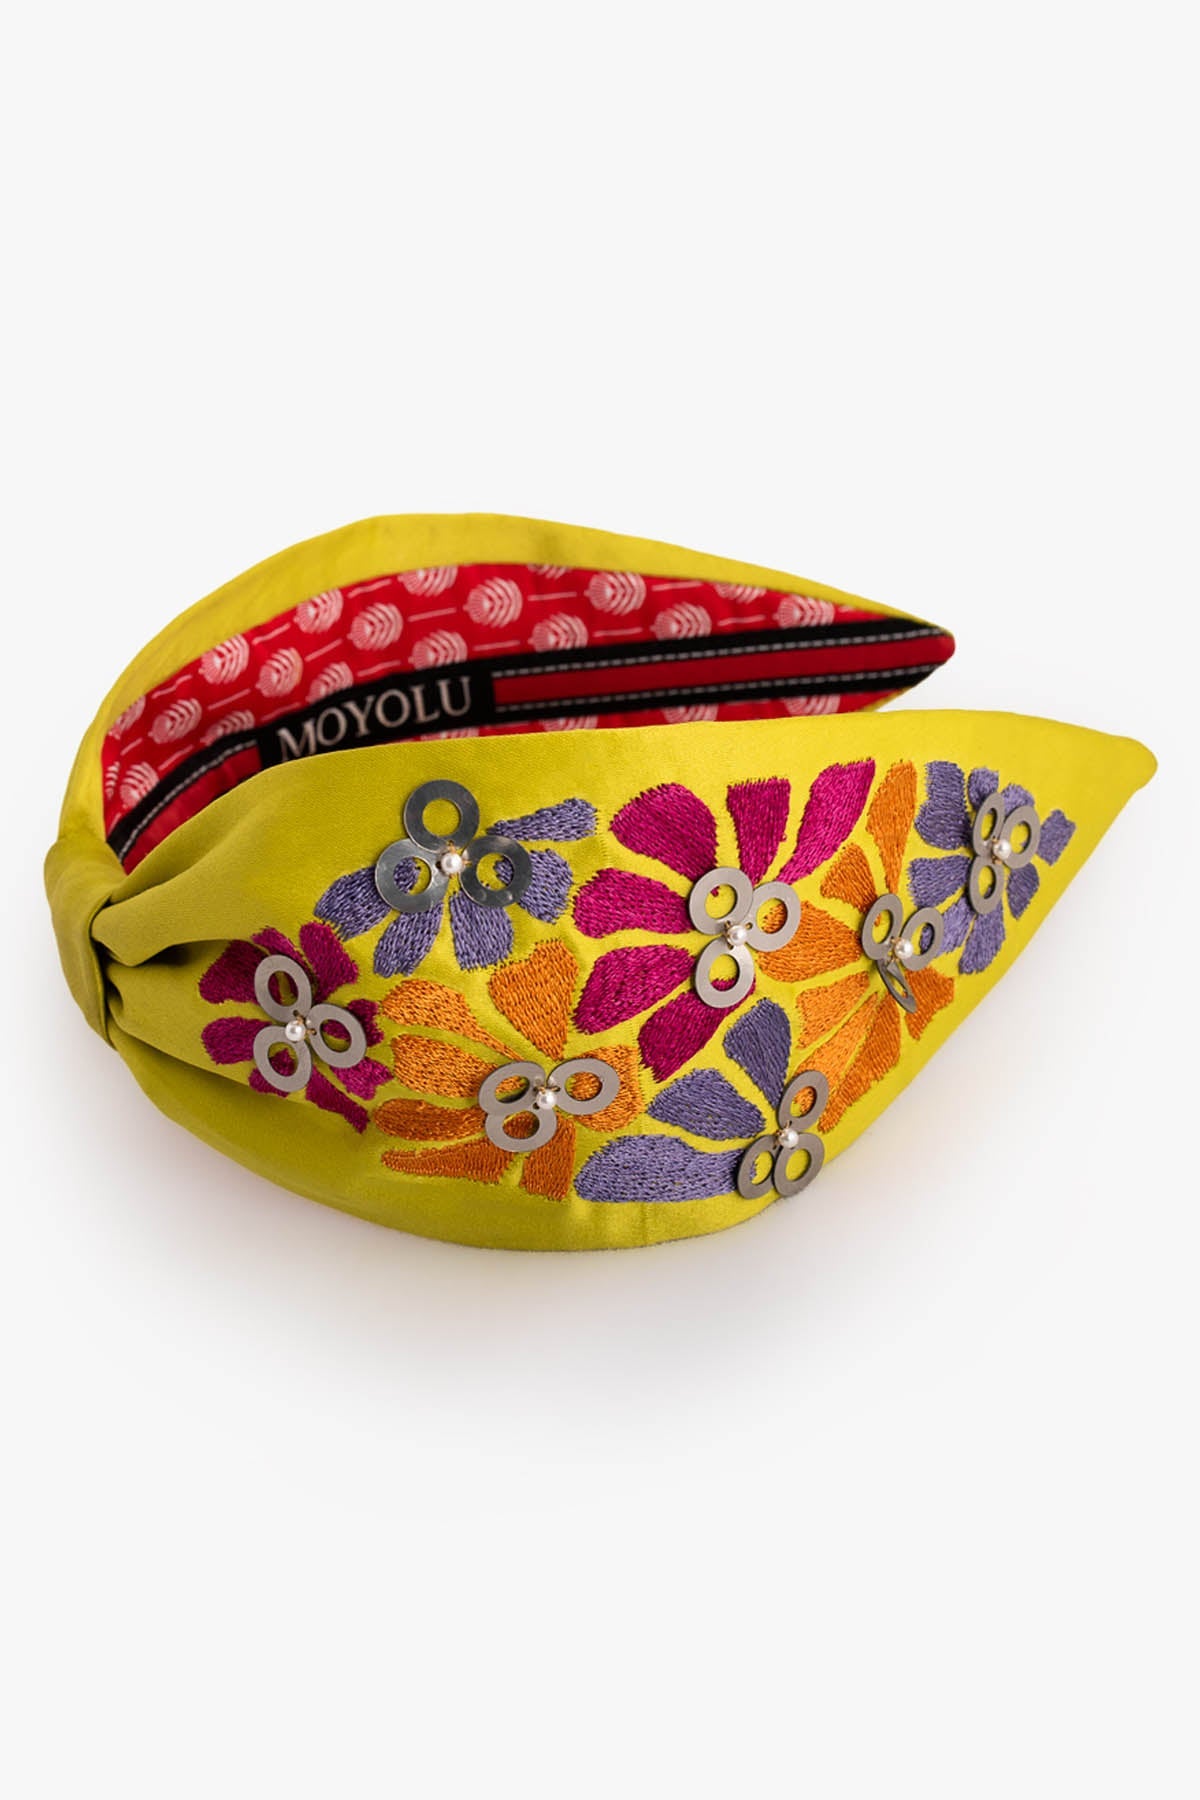 Moyolu Green Satin Floral Headband Accessories online at ScrollnShops